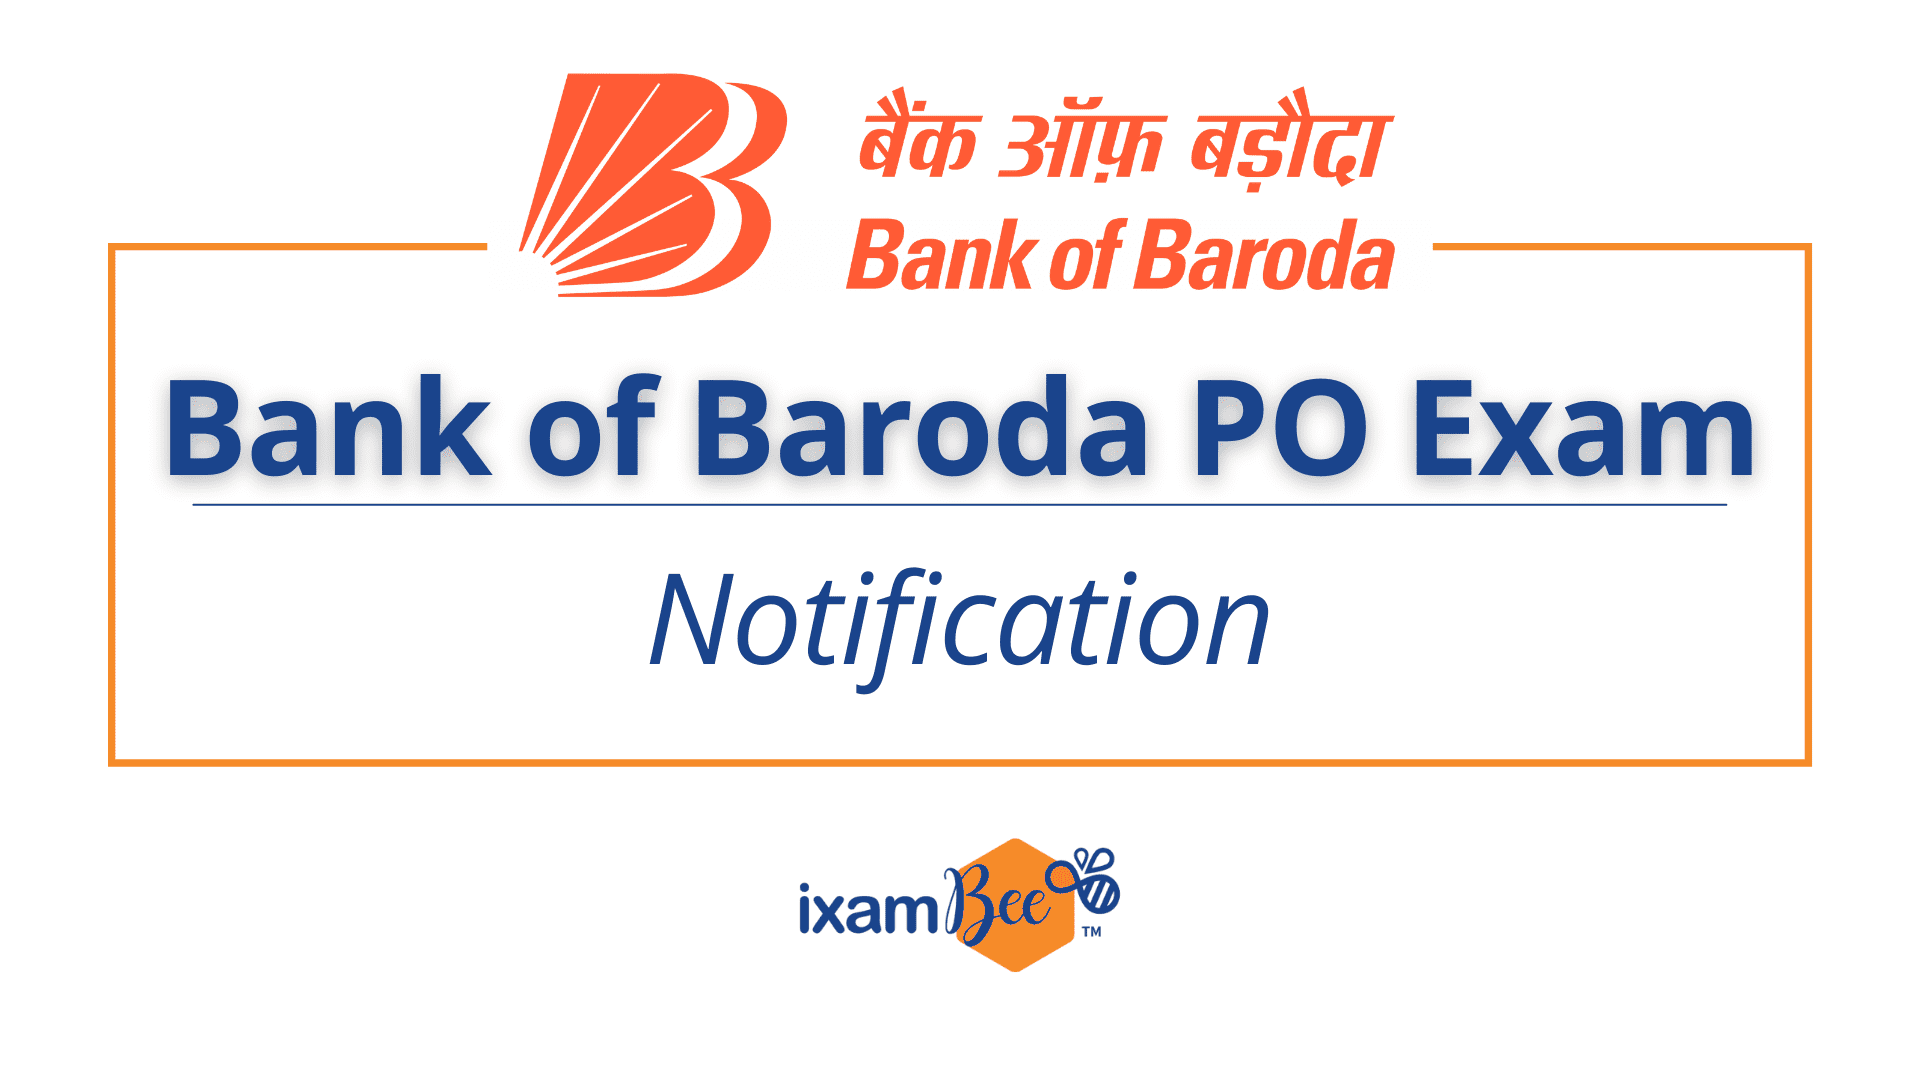 Bank of Baroda PO Exam Notification